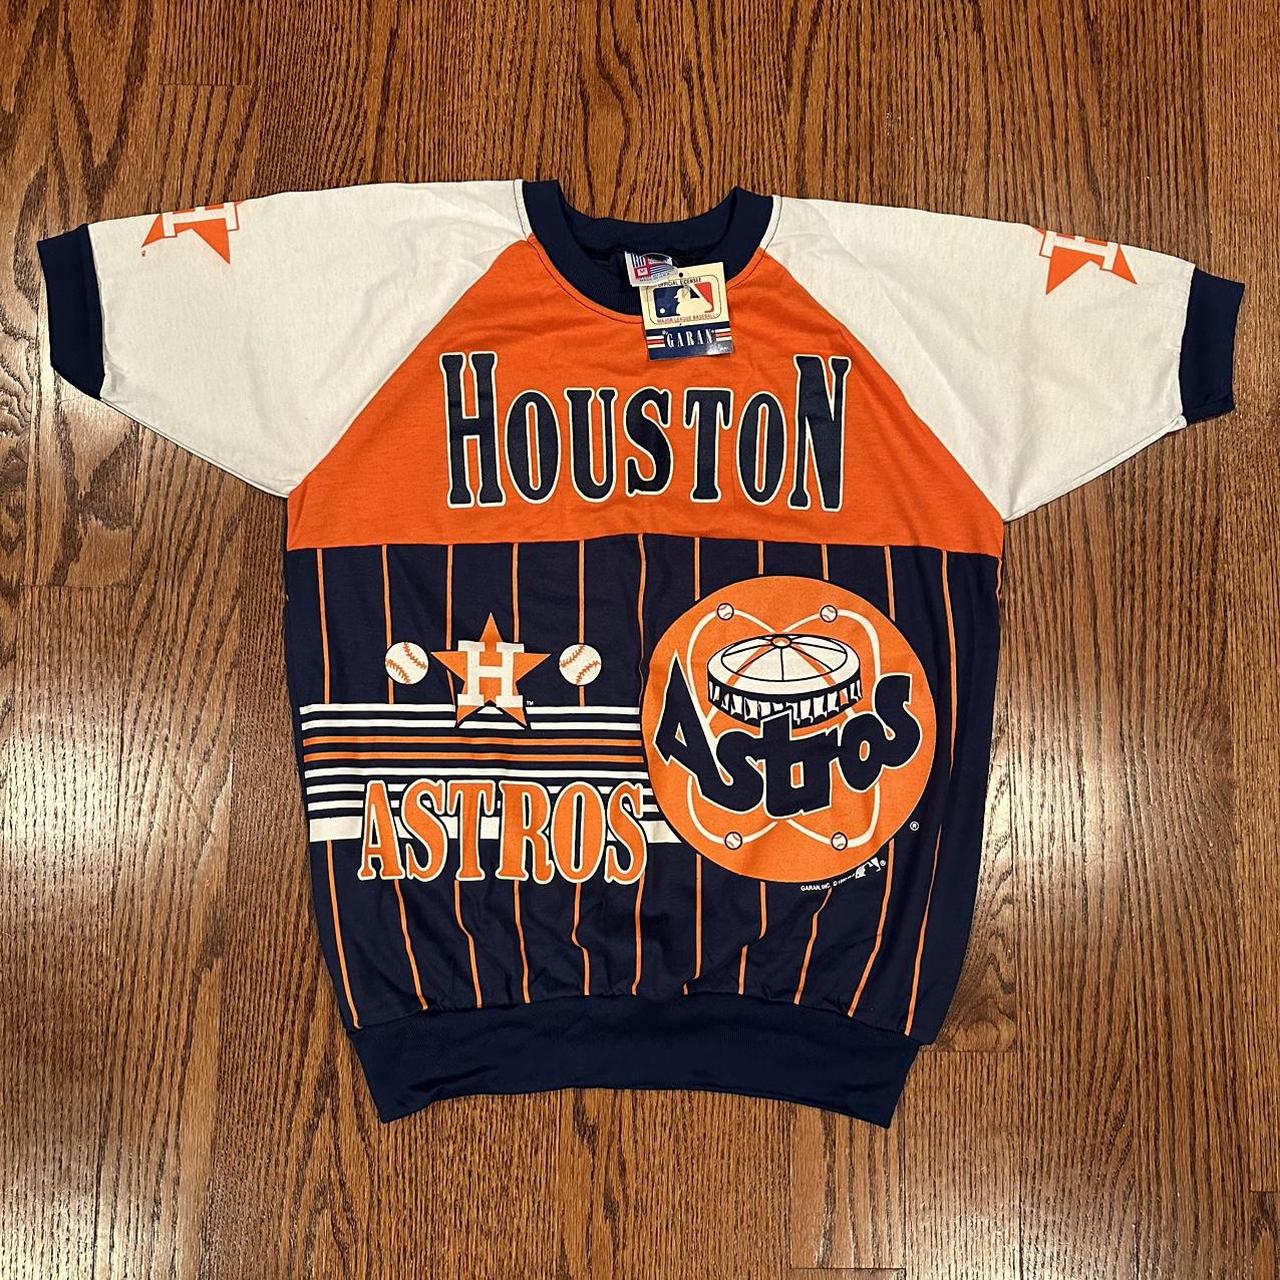 Mens Vintage Houston Astros Sweatshirt Size - Depop